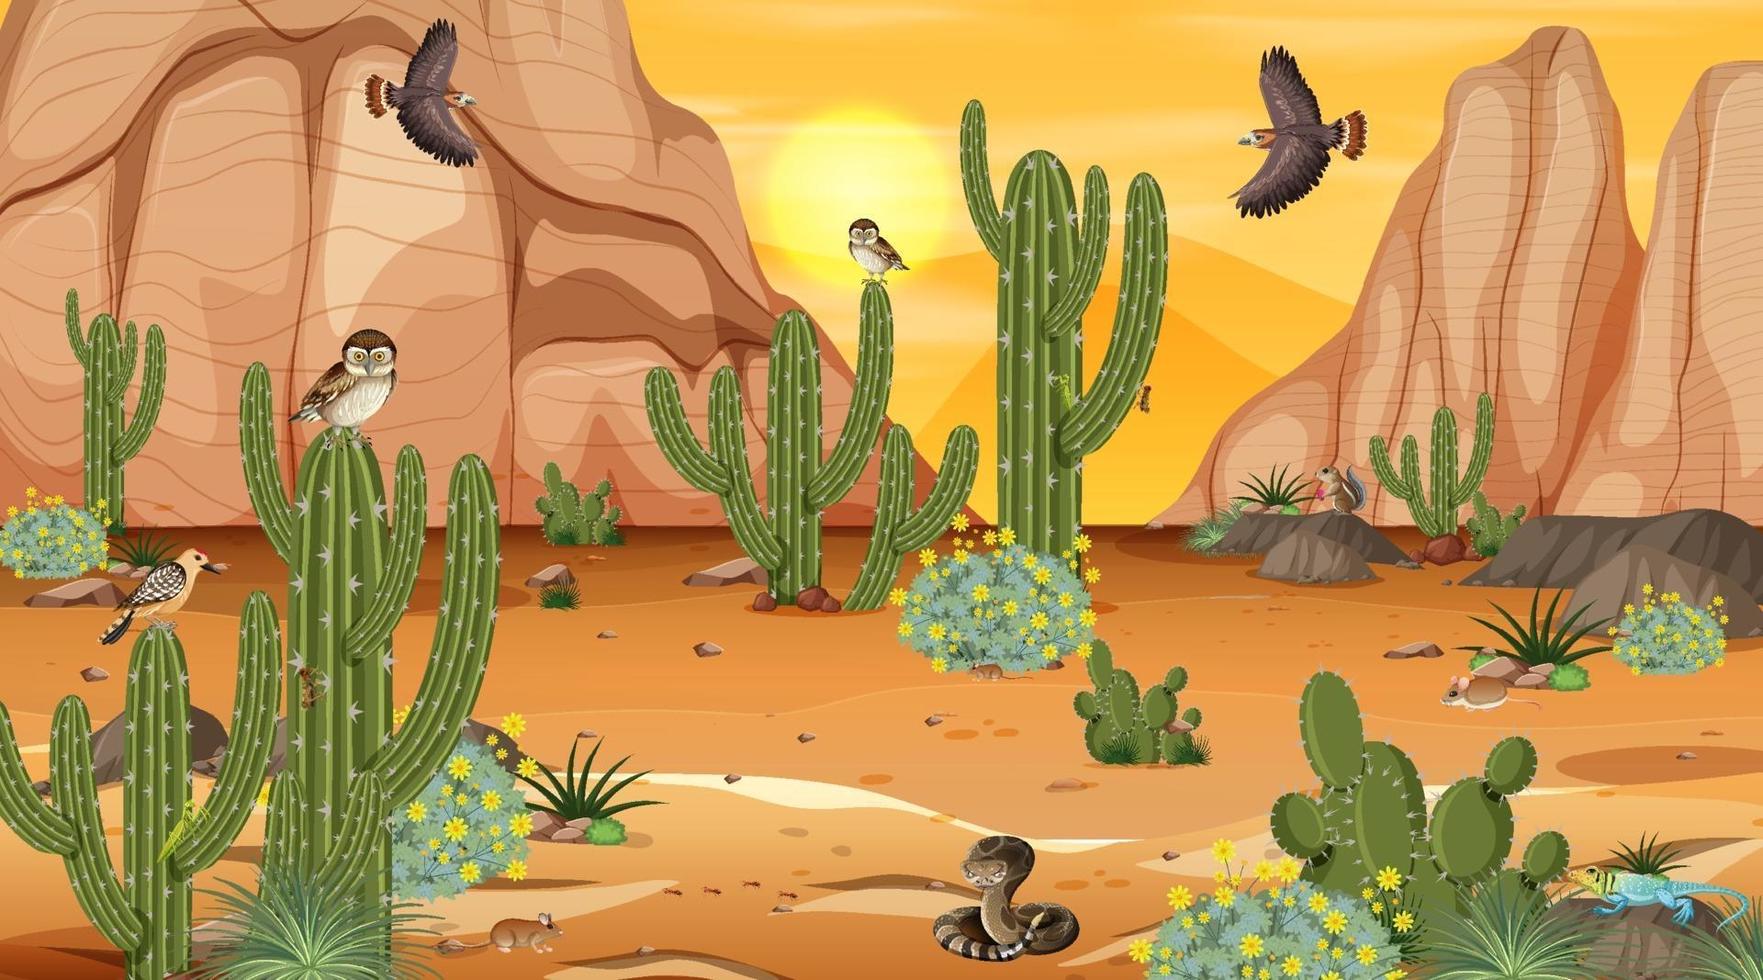 Desert forest landscape at sunset scene with desert animals and plants vector